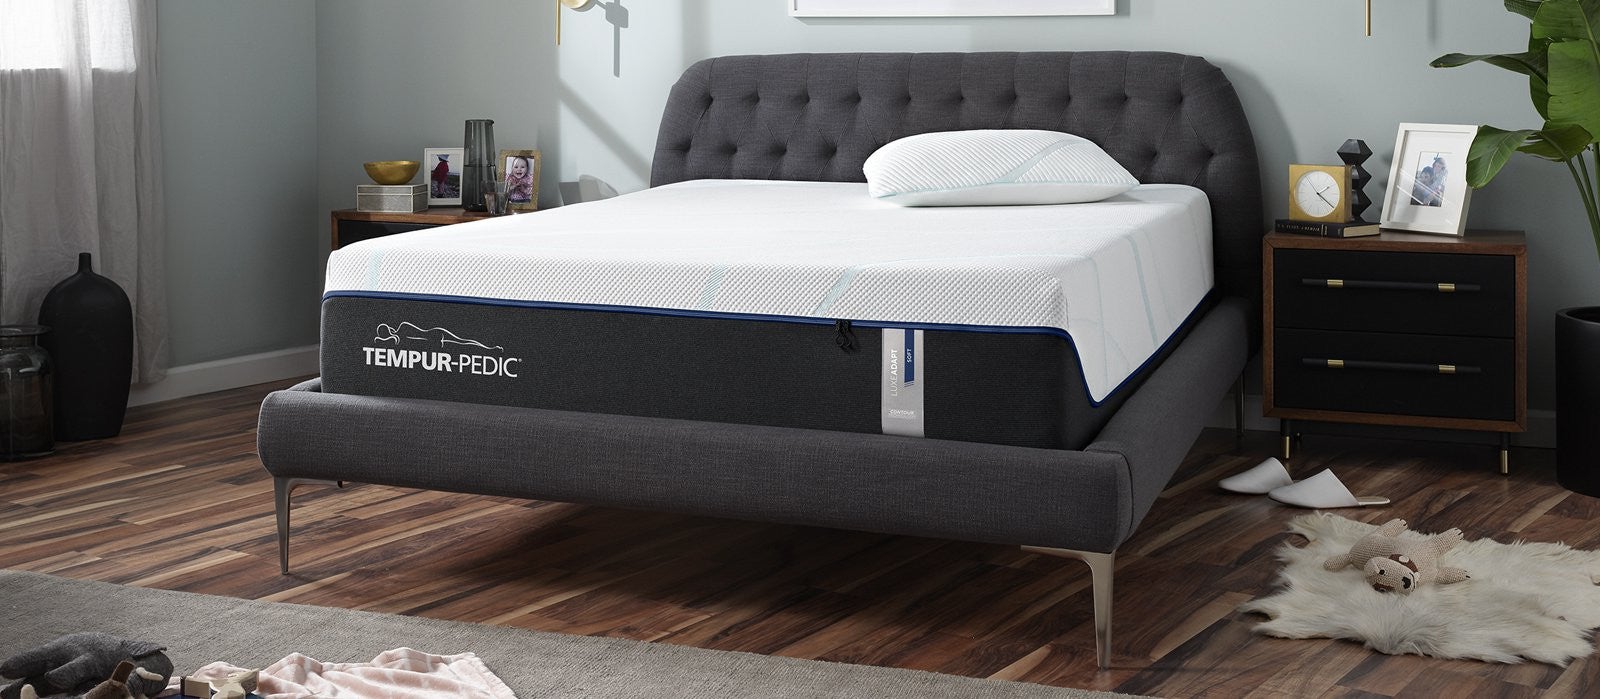 tempur pedic luxury bamboo mattress pad